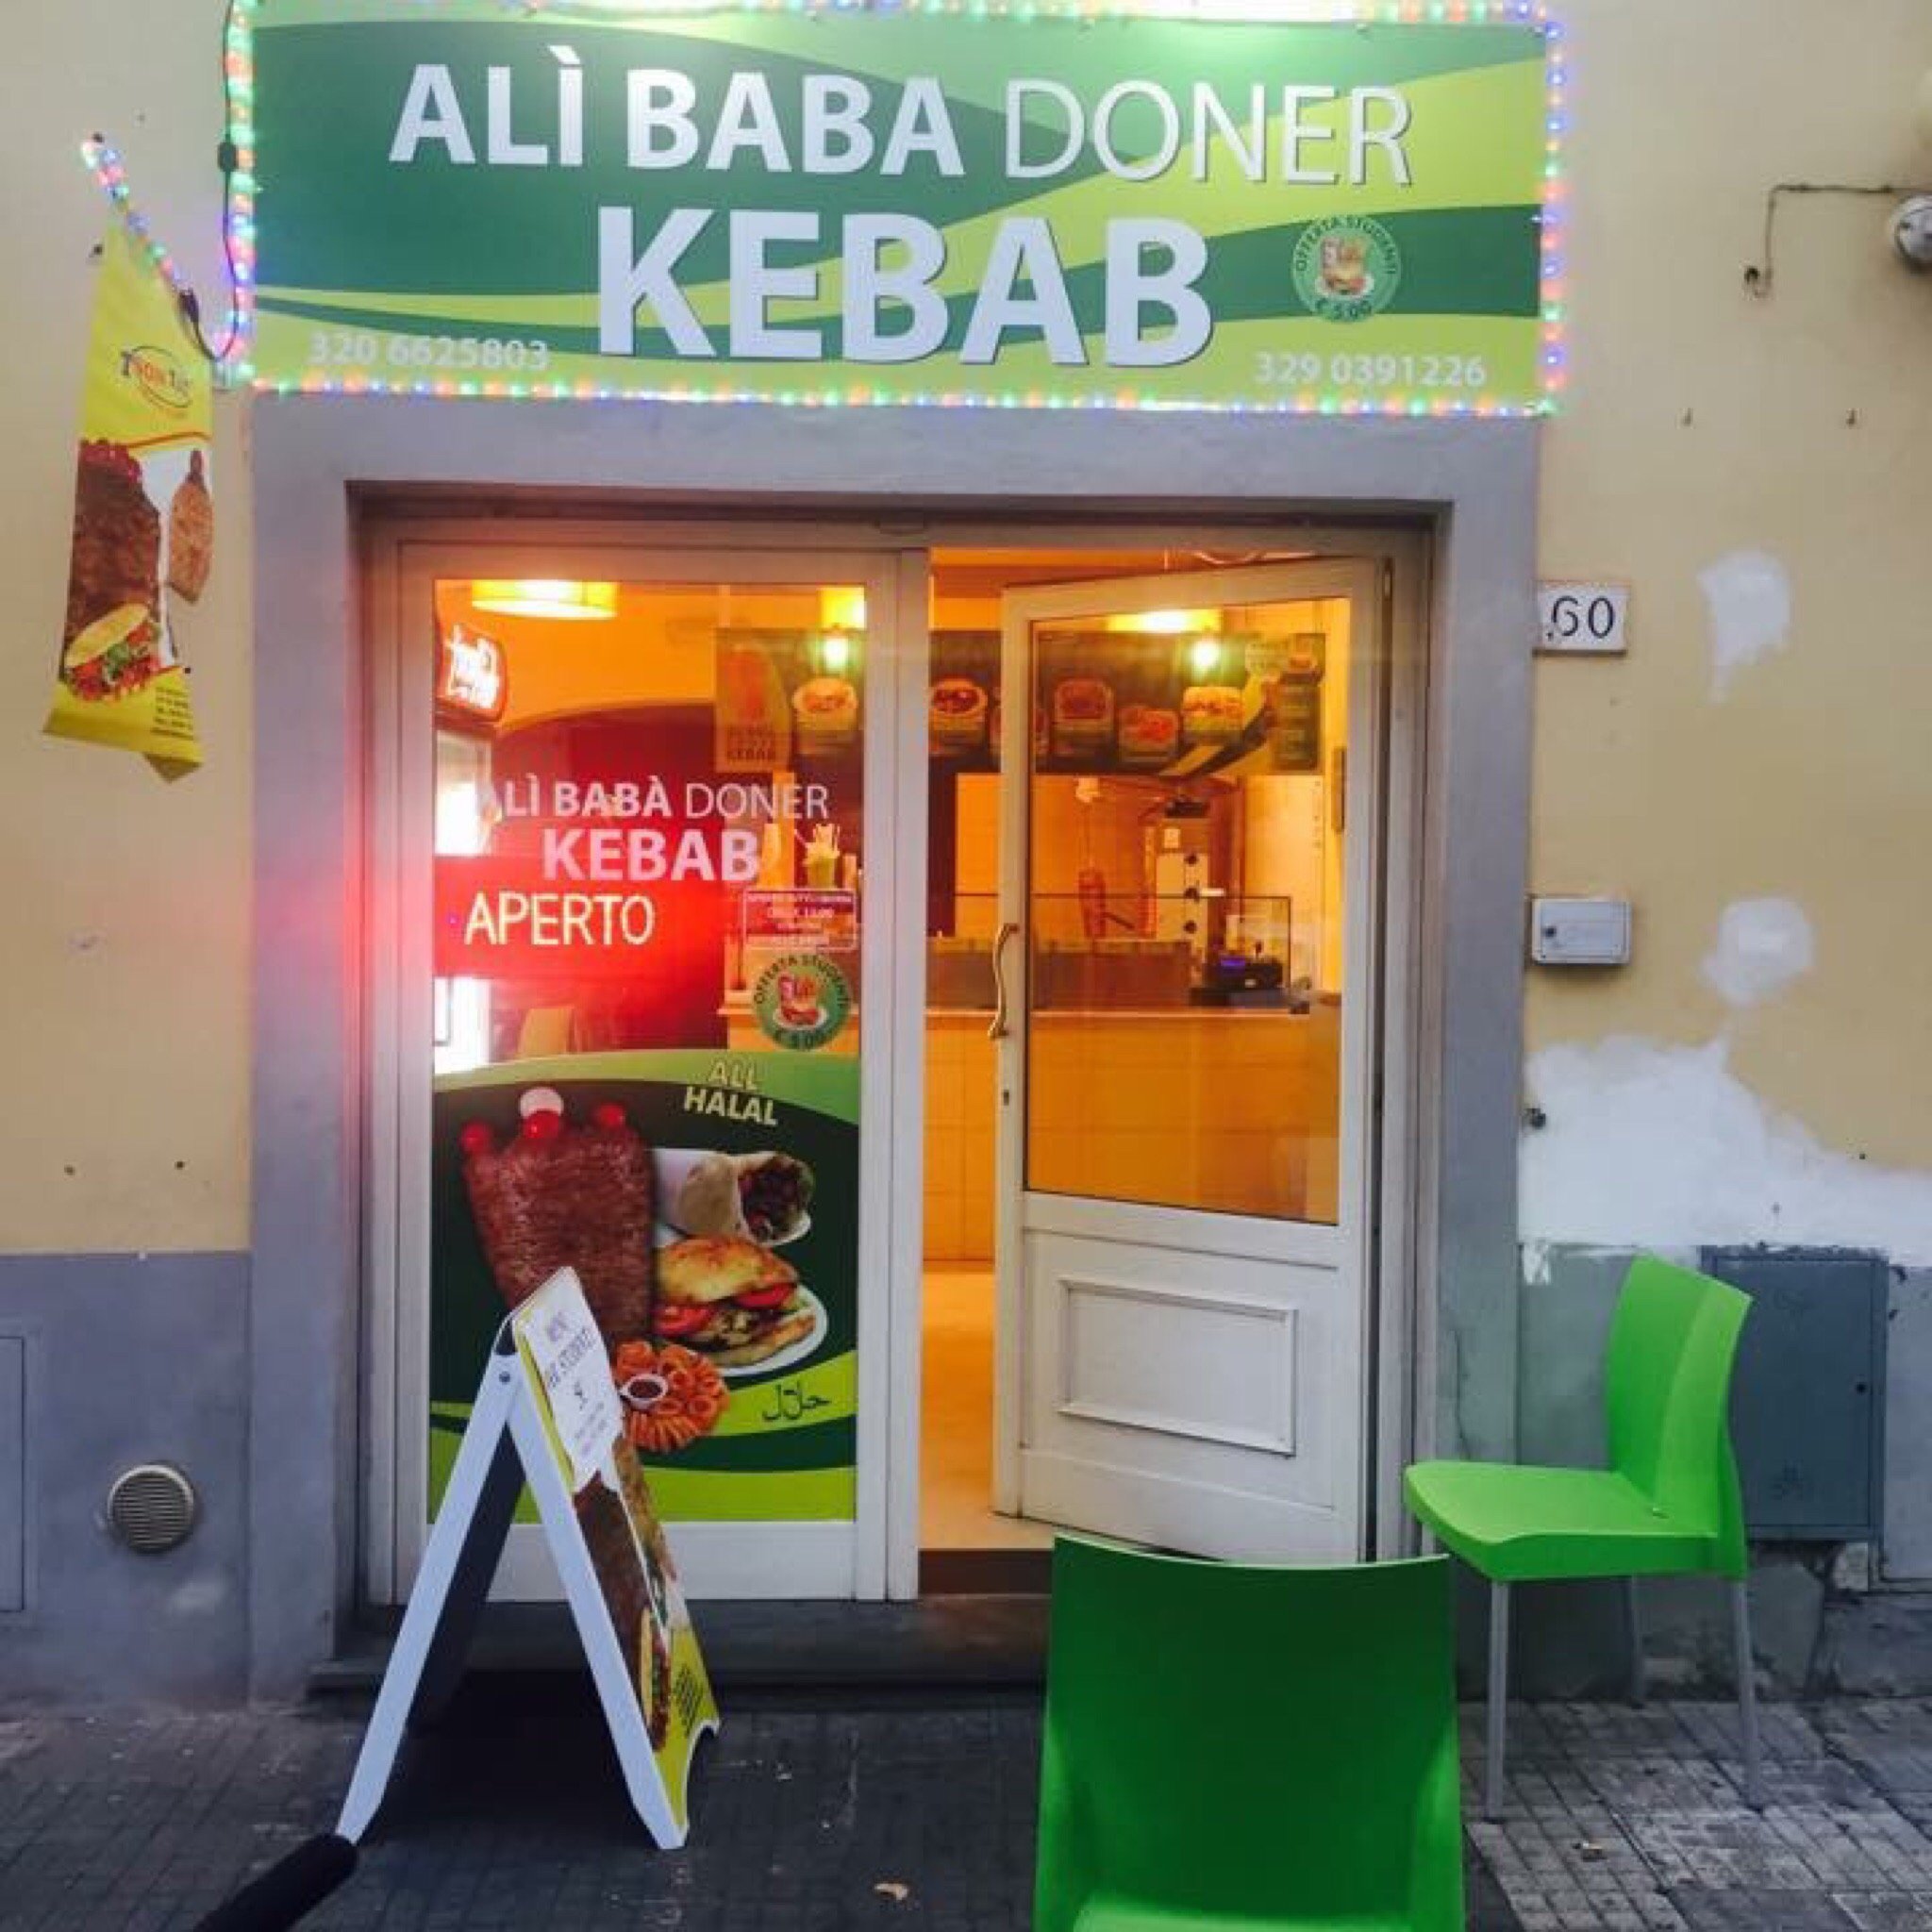 Alibaba Doner Kebab, Pisa